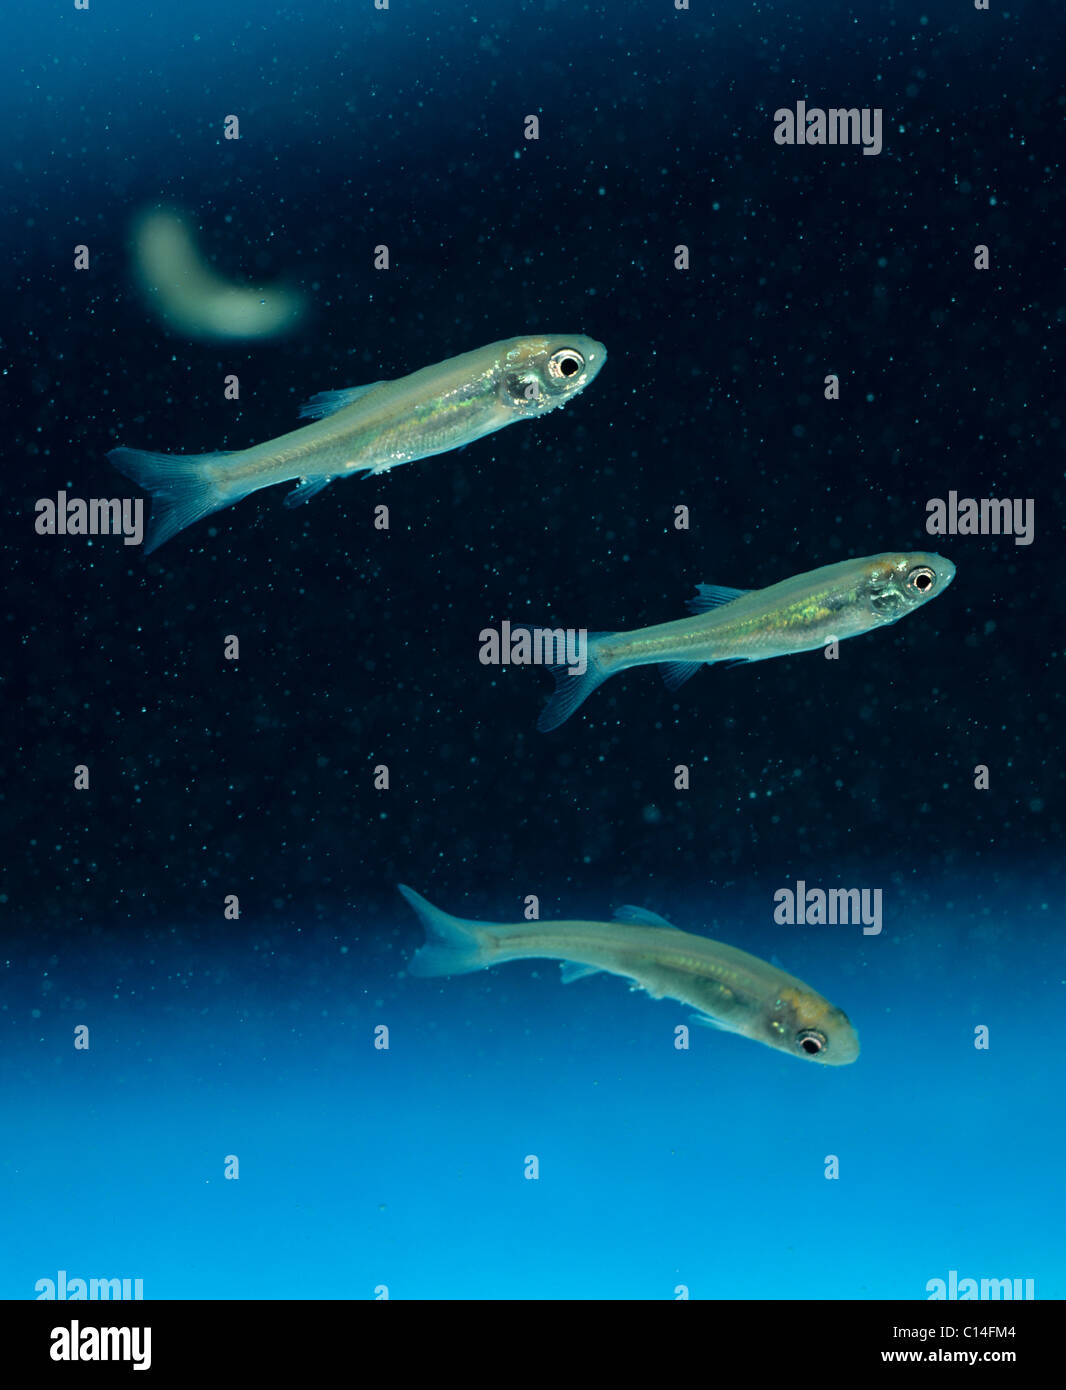 Fathead minnows (Pimephales promelas) fish used in ecological studies Stock  Photo - Alamy